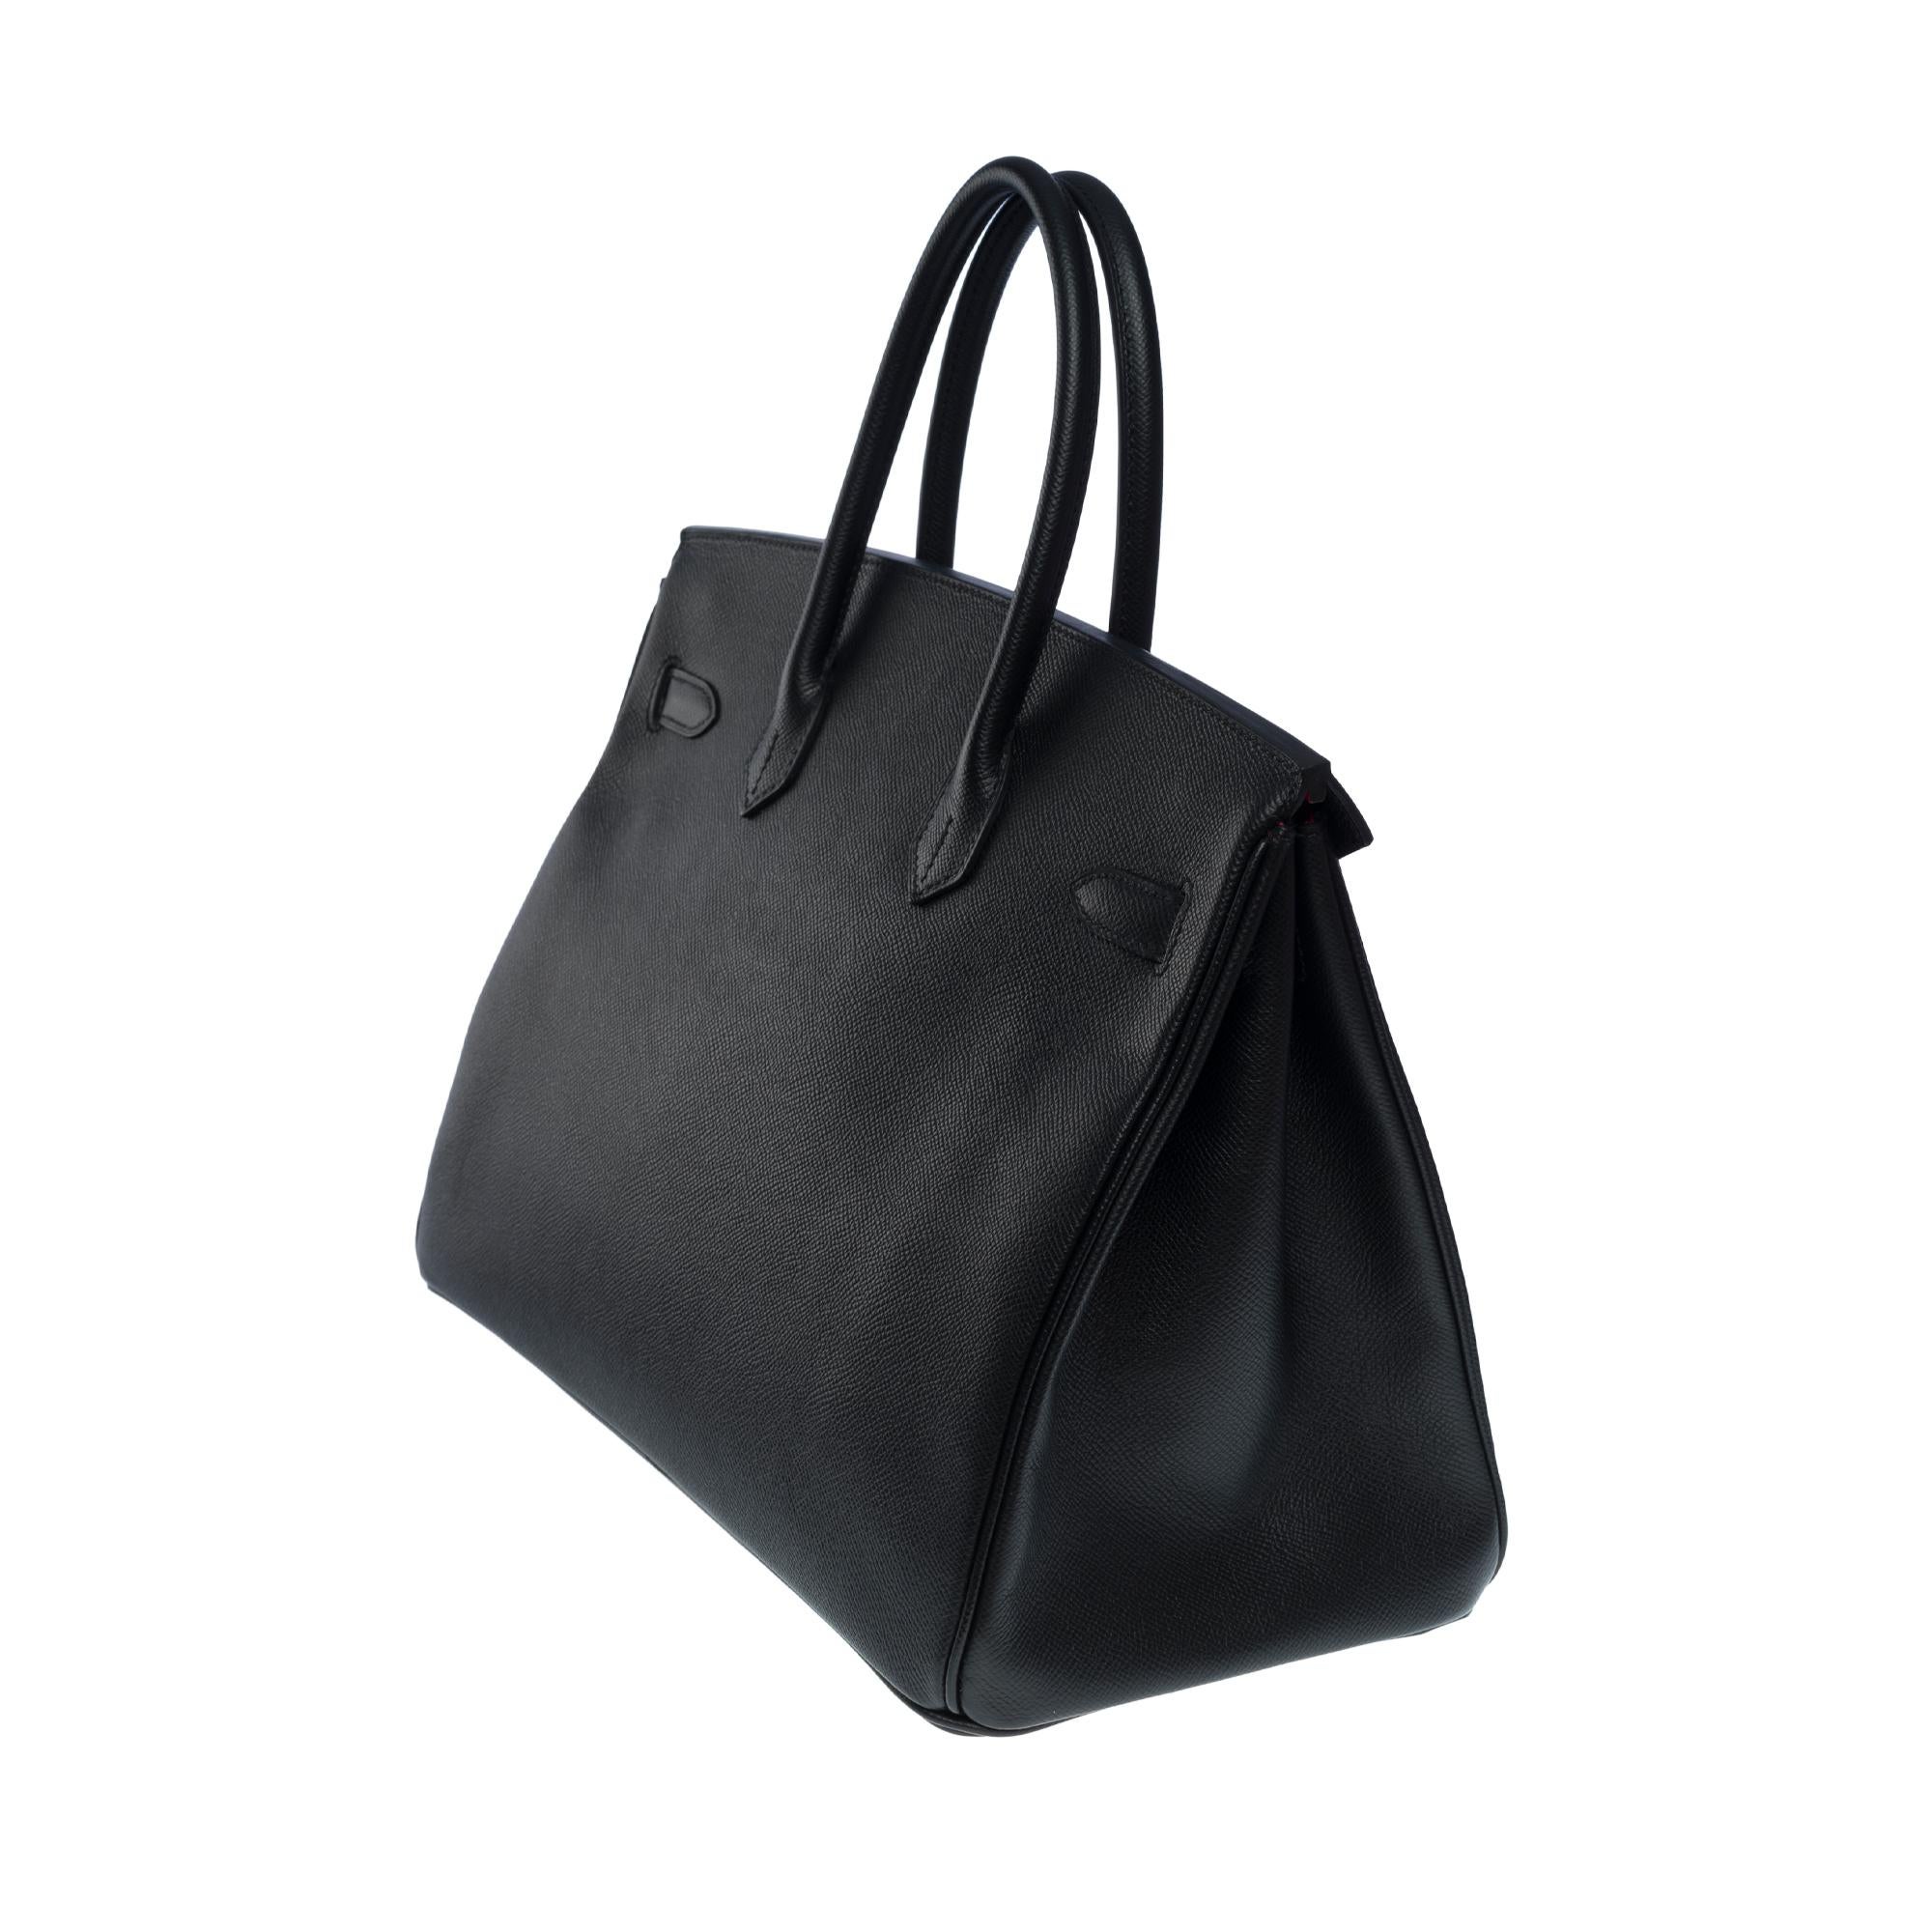 Women's or Men's Rare Hermès Birkin 35 HSS (Special Order) handbag in black epsom leather, BGHW